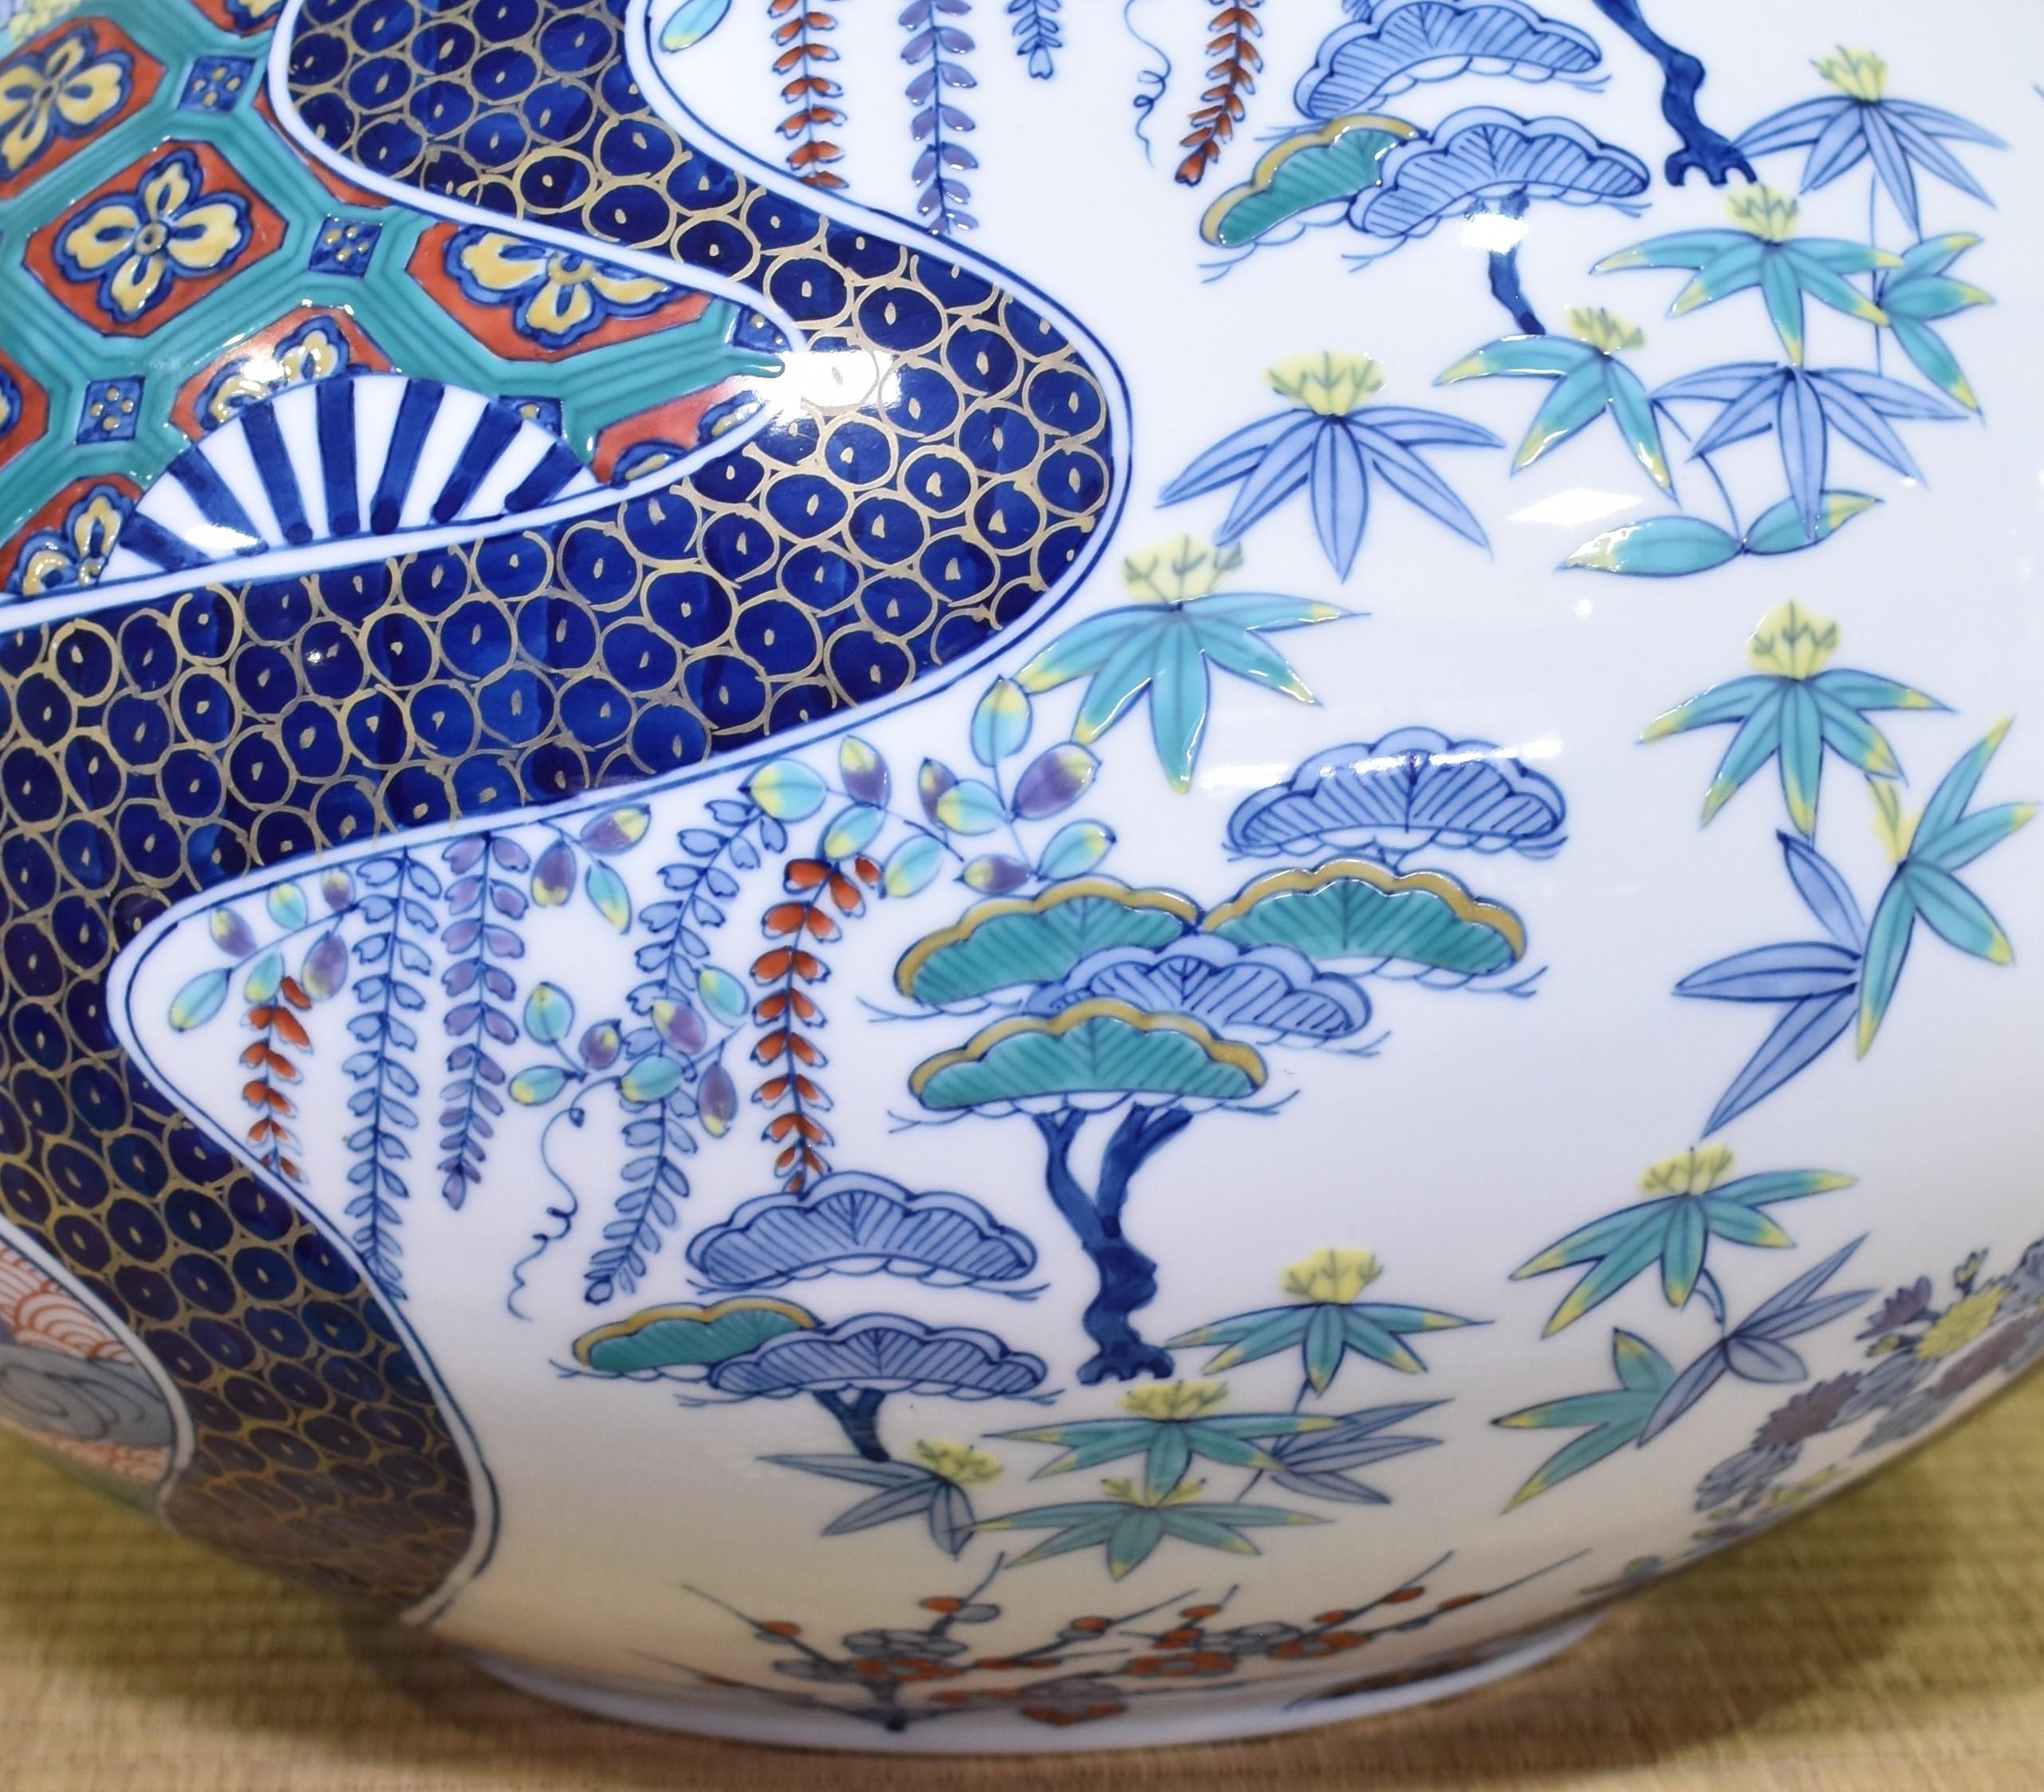 Contemporary Japanese Decorative Green Blue Gold Porcelain Vas by Master Artist, 3